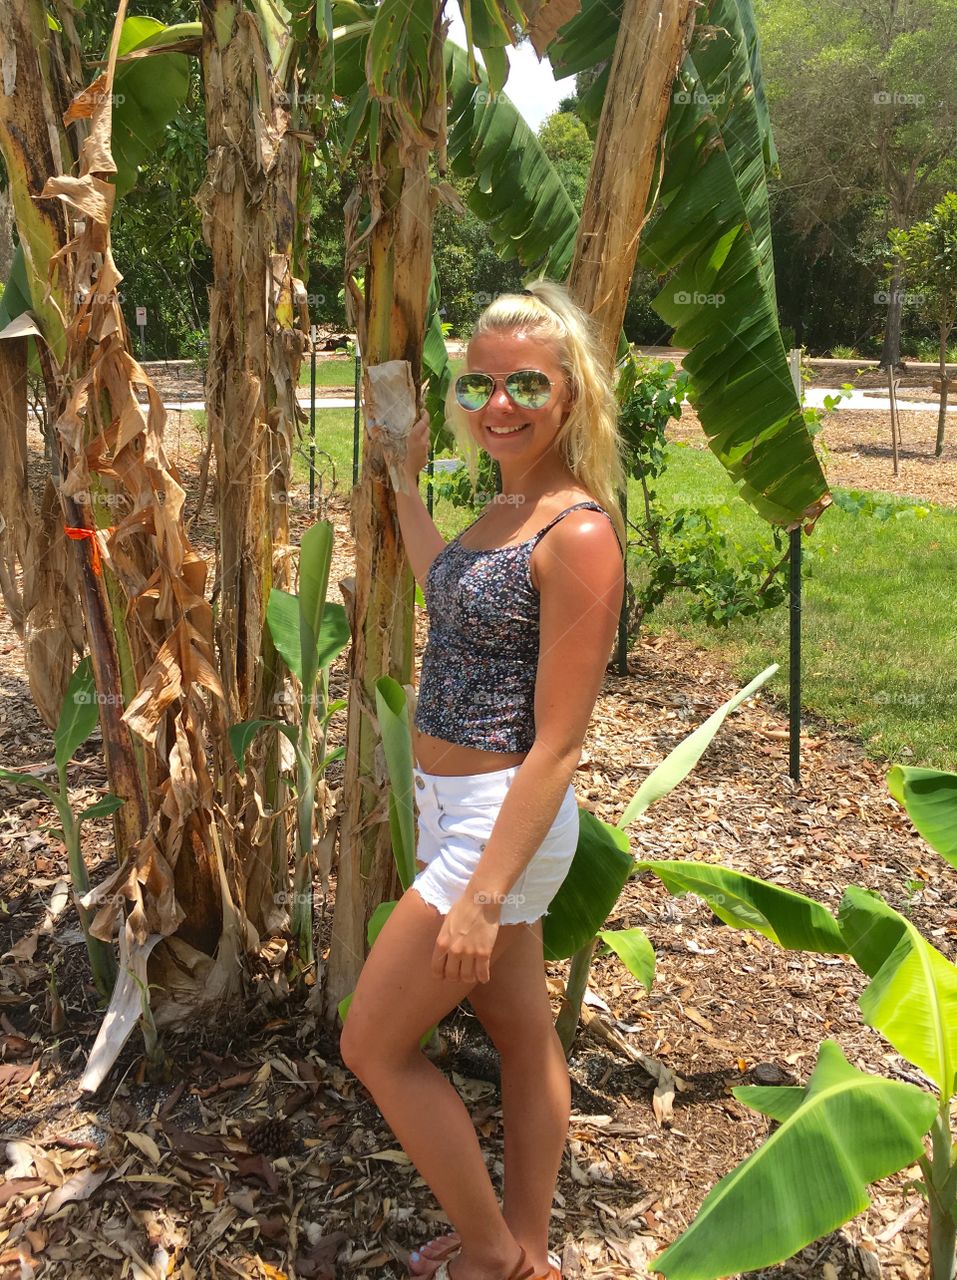 Woman in sunglasses standing near banana plant